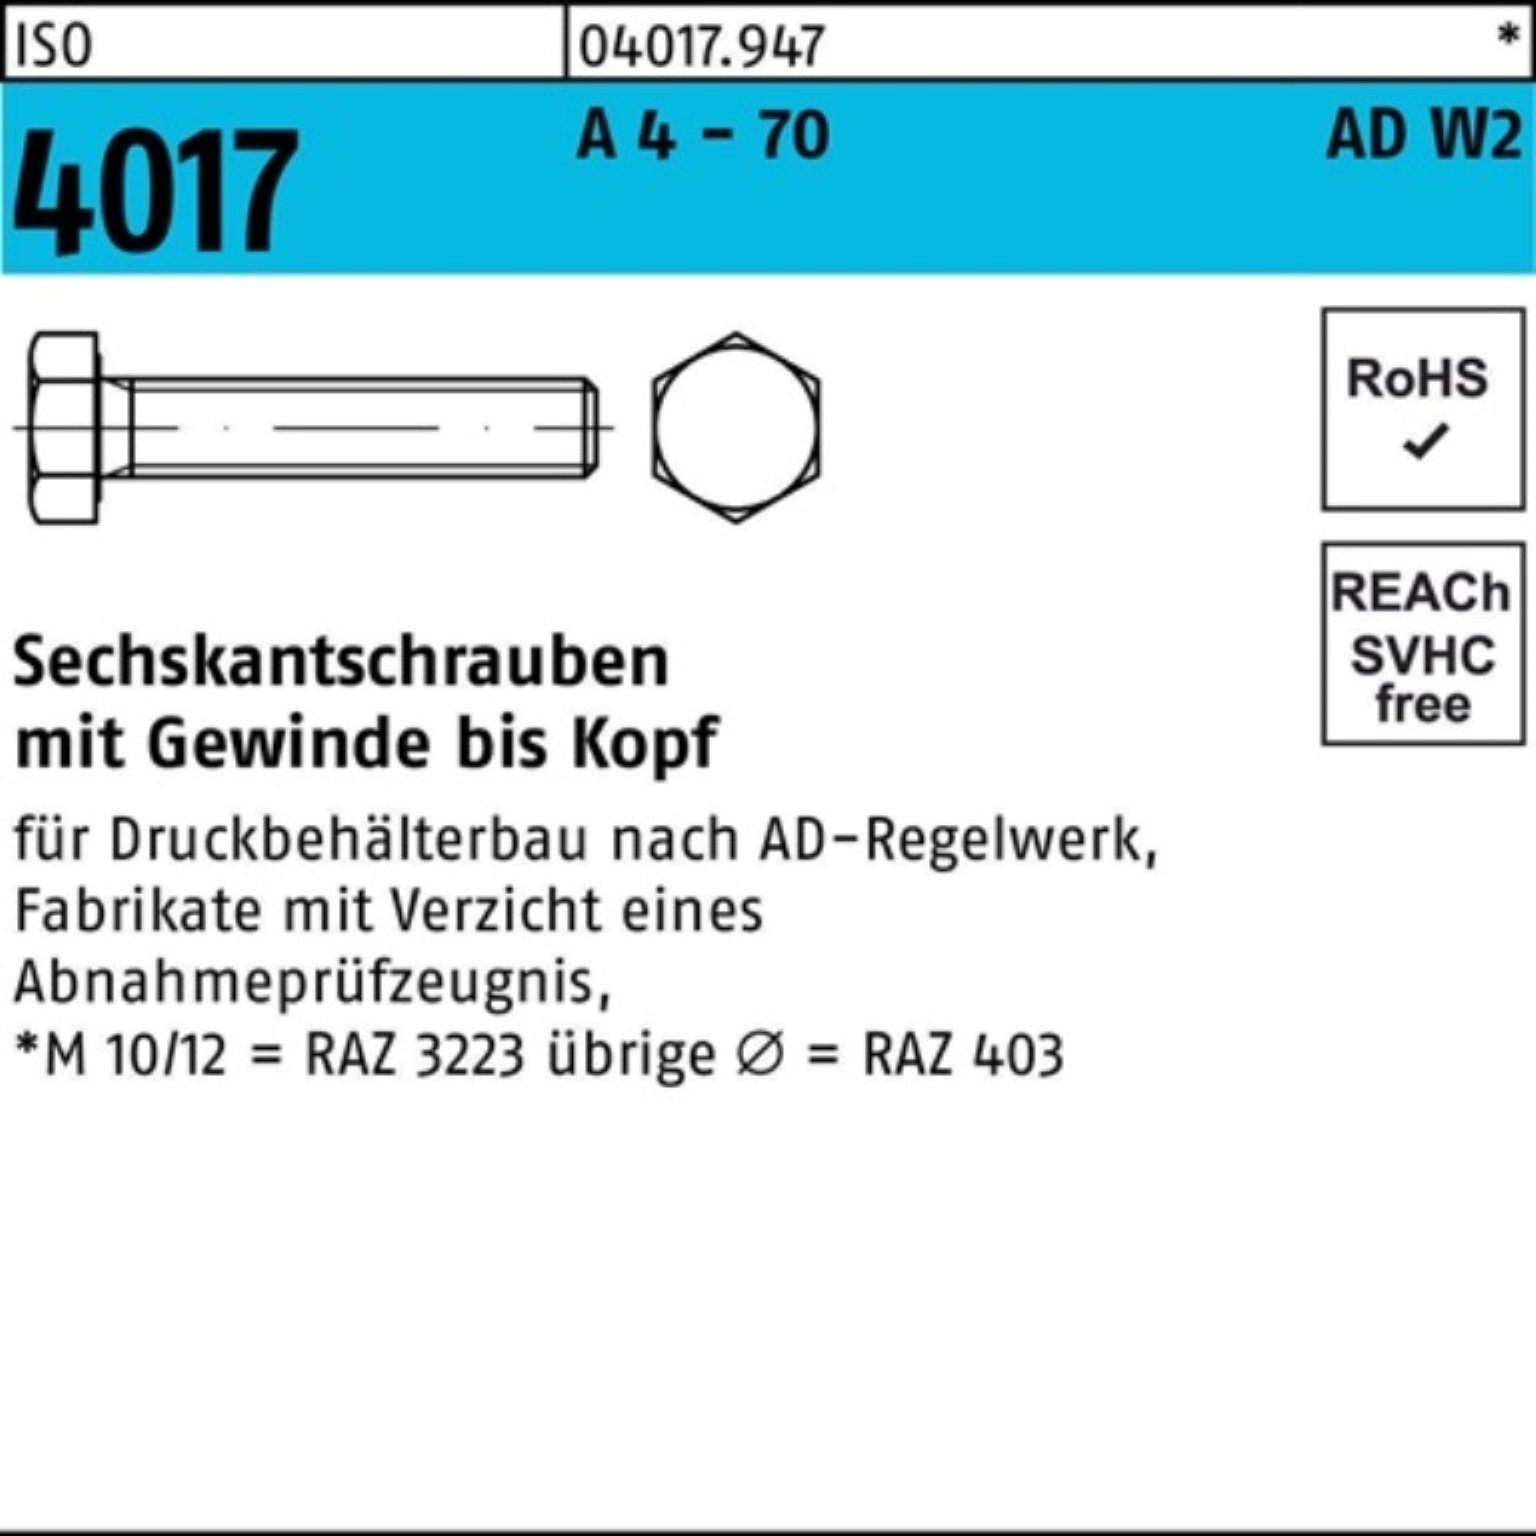 Bufab Sechskantschraube 100er Pack Sechskantschraube ISO 4017 VG M5x 12 A 4 - 70 AD-W2 100 St